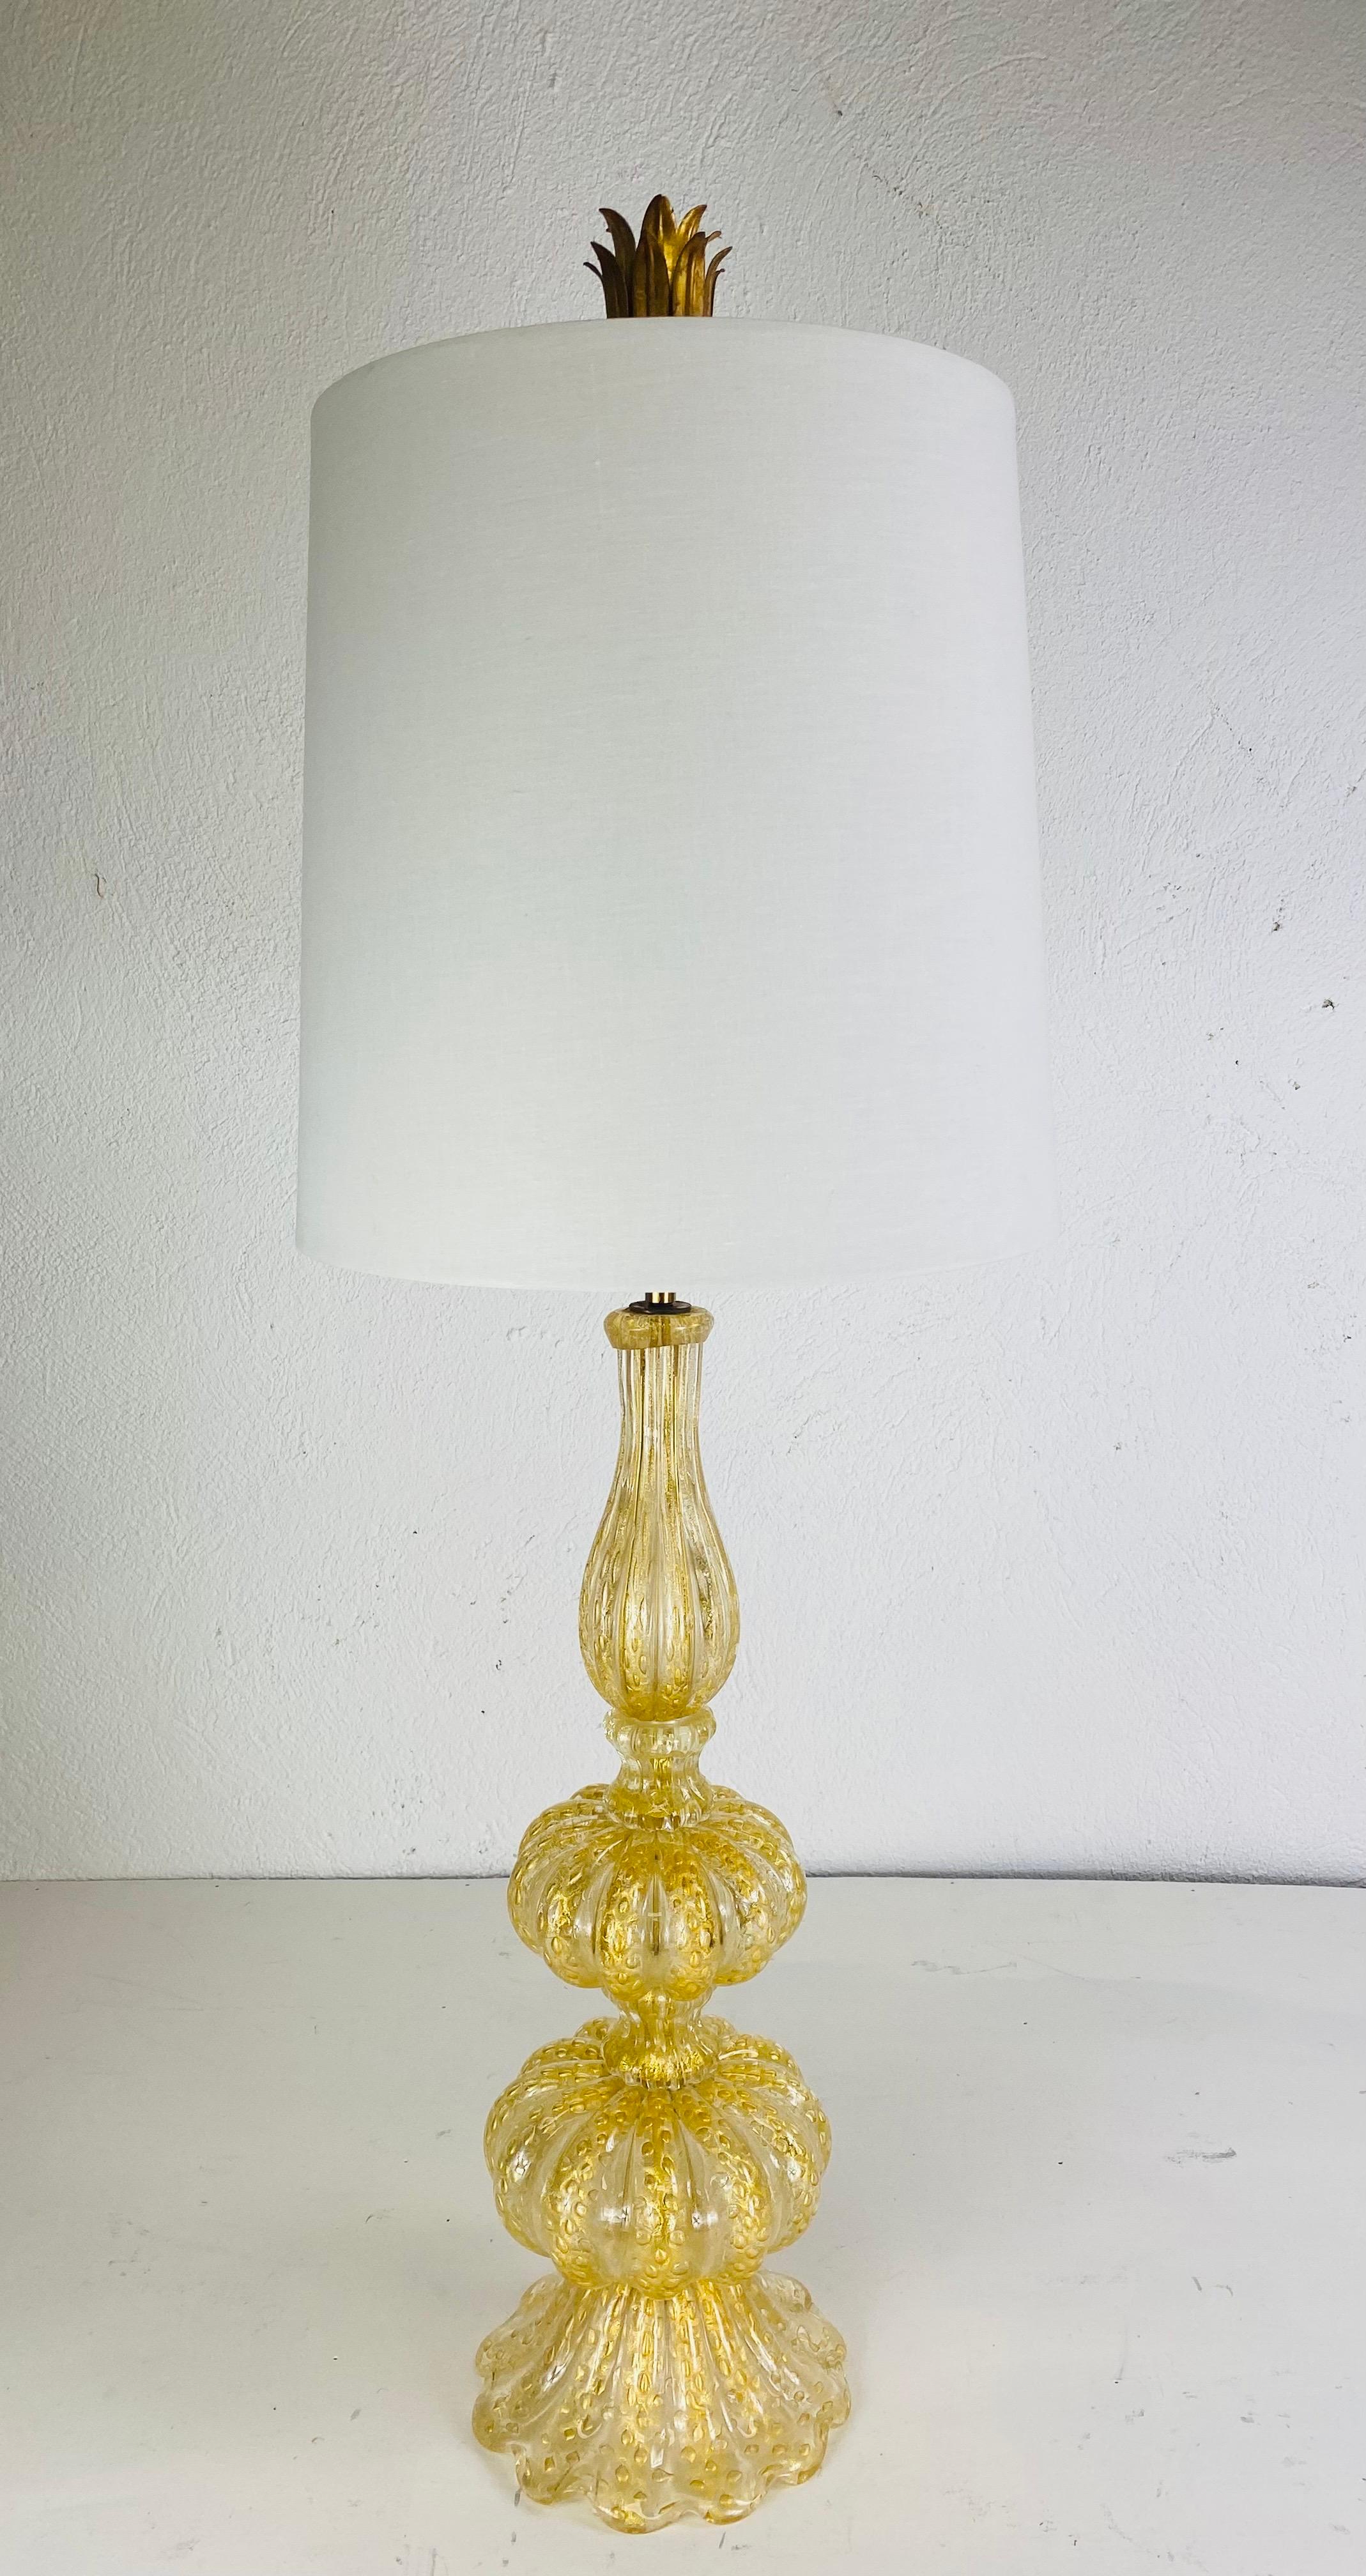 Barovier Toso single handblown Marano glass table lamp For Sale 4